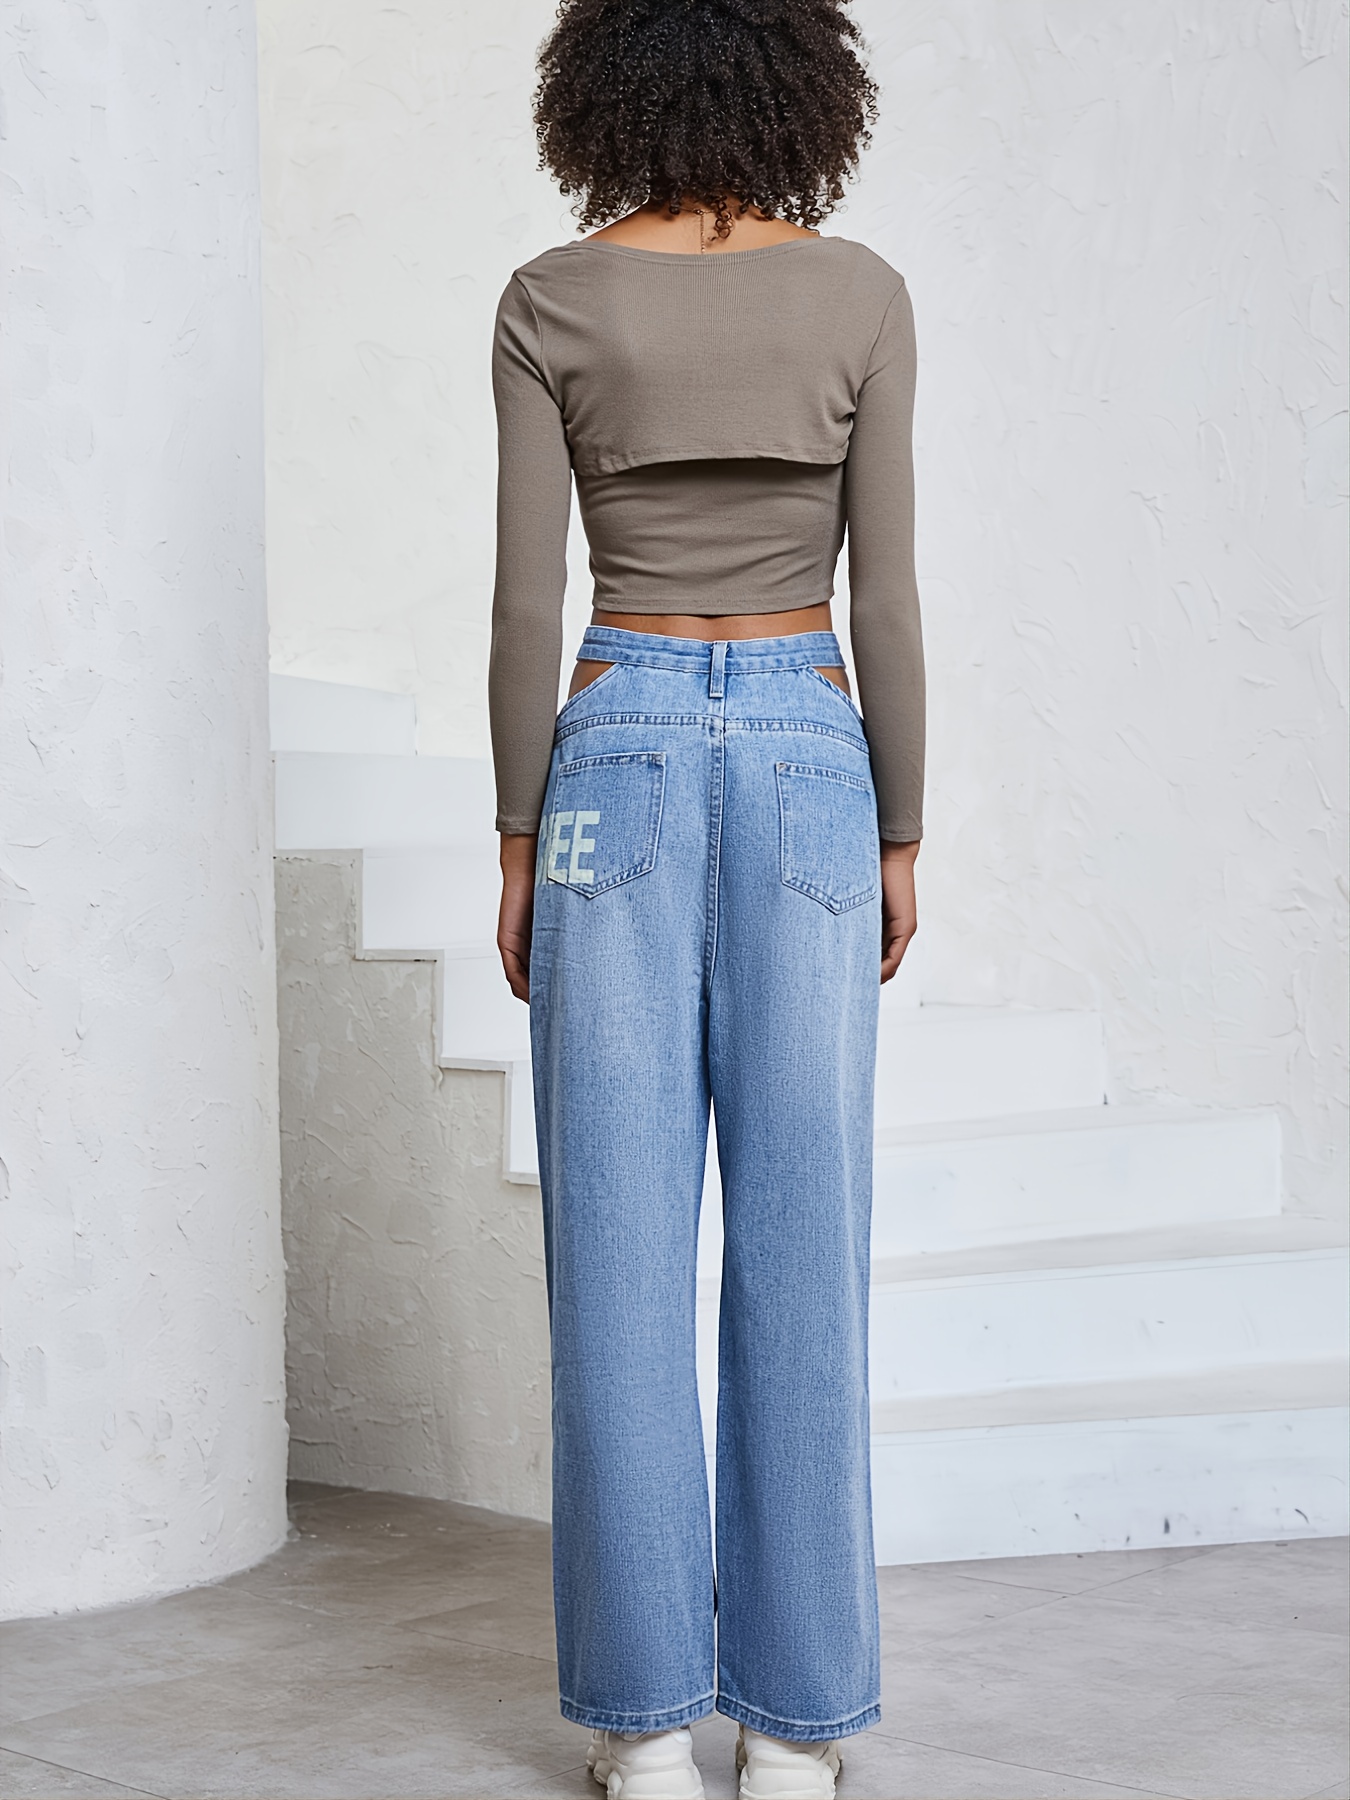 Asymmetrical Jeans Trend 2019